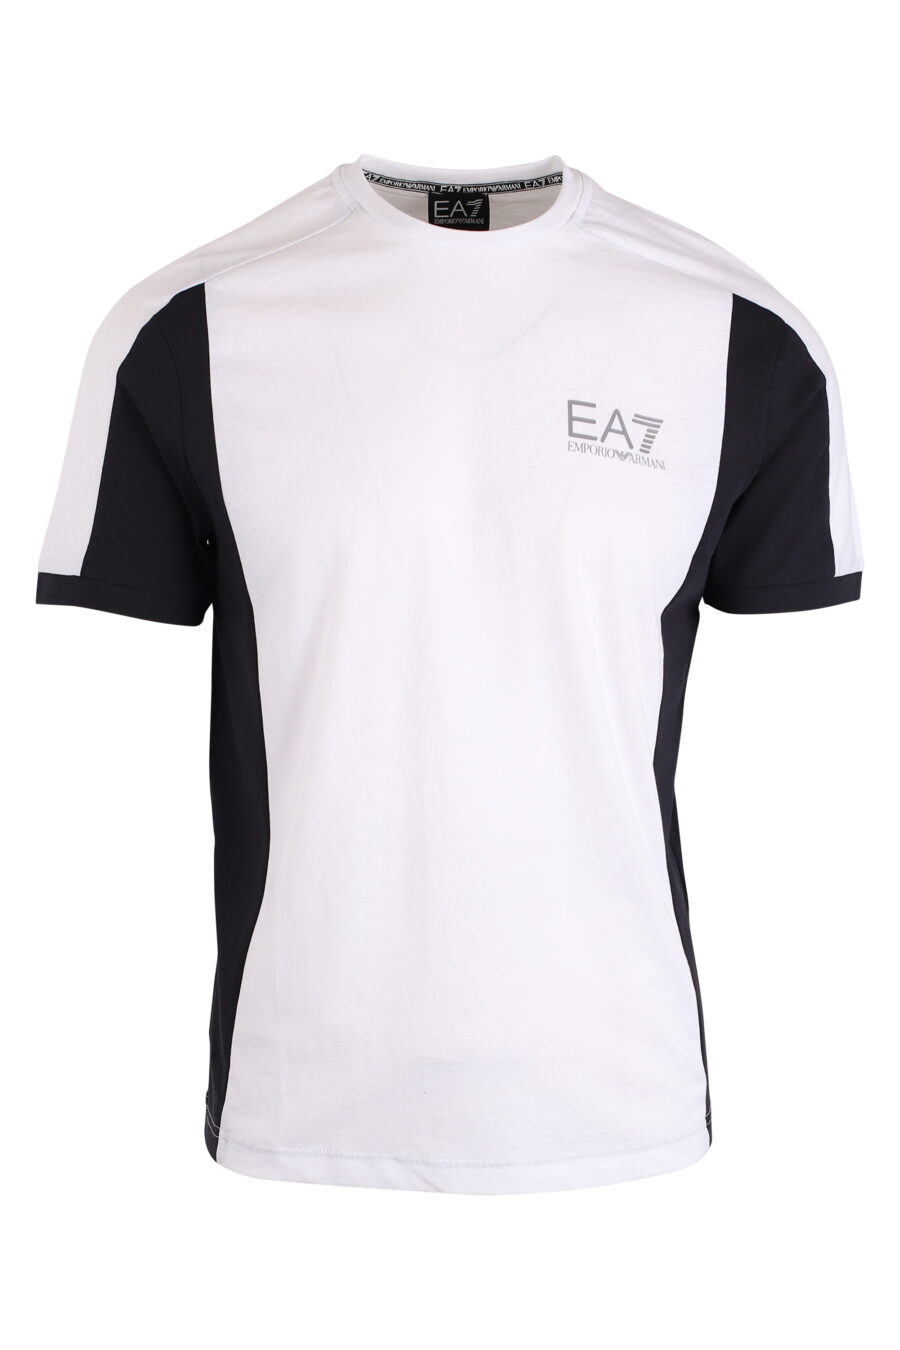 T-shirt branca com mini logótipo "lux identity" - IMG 4203